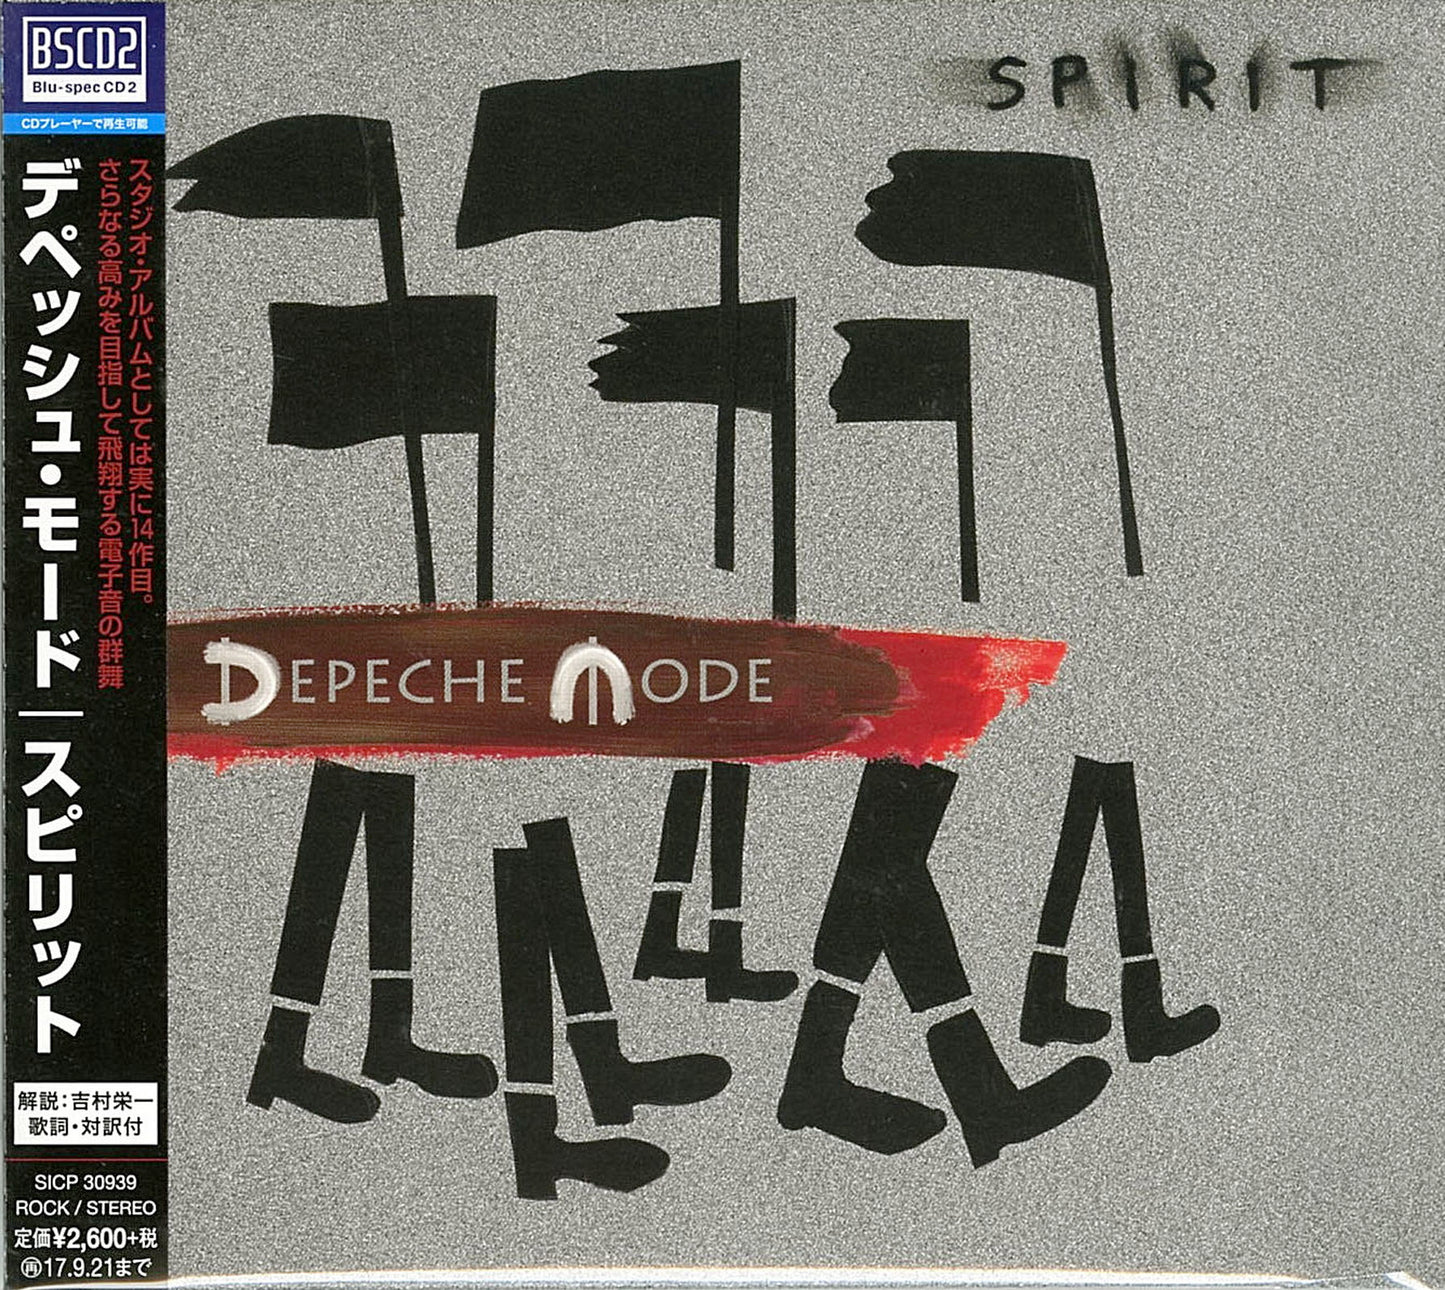 Depeche Mode - Spirit - Japan  Blu-spec CD2